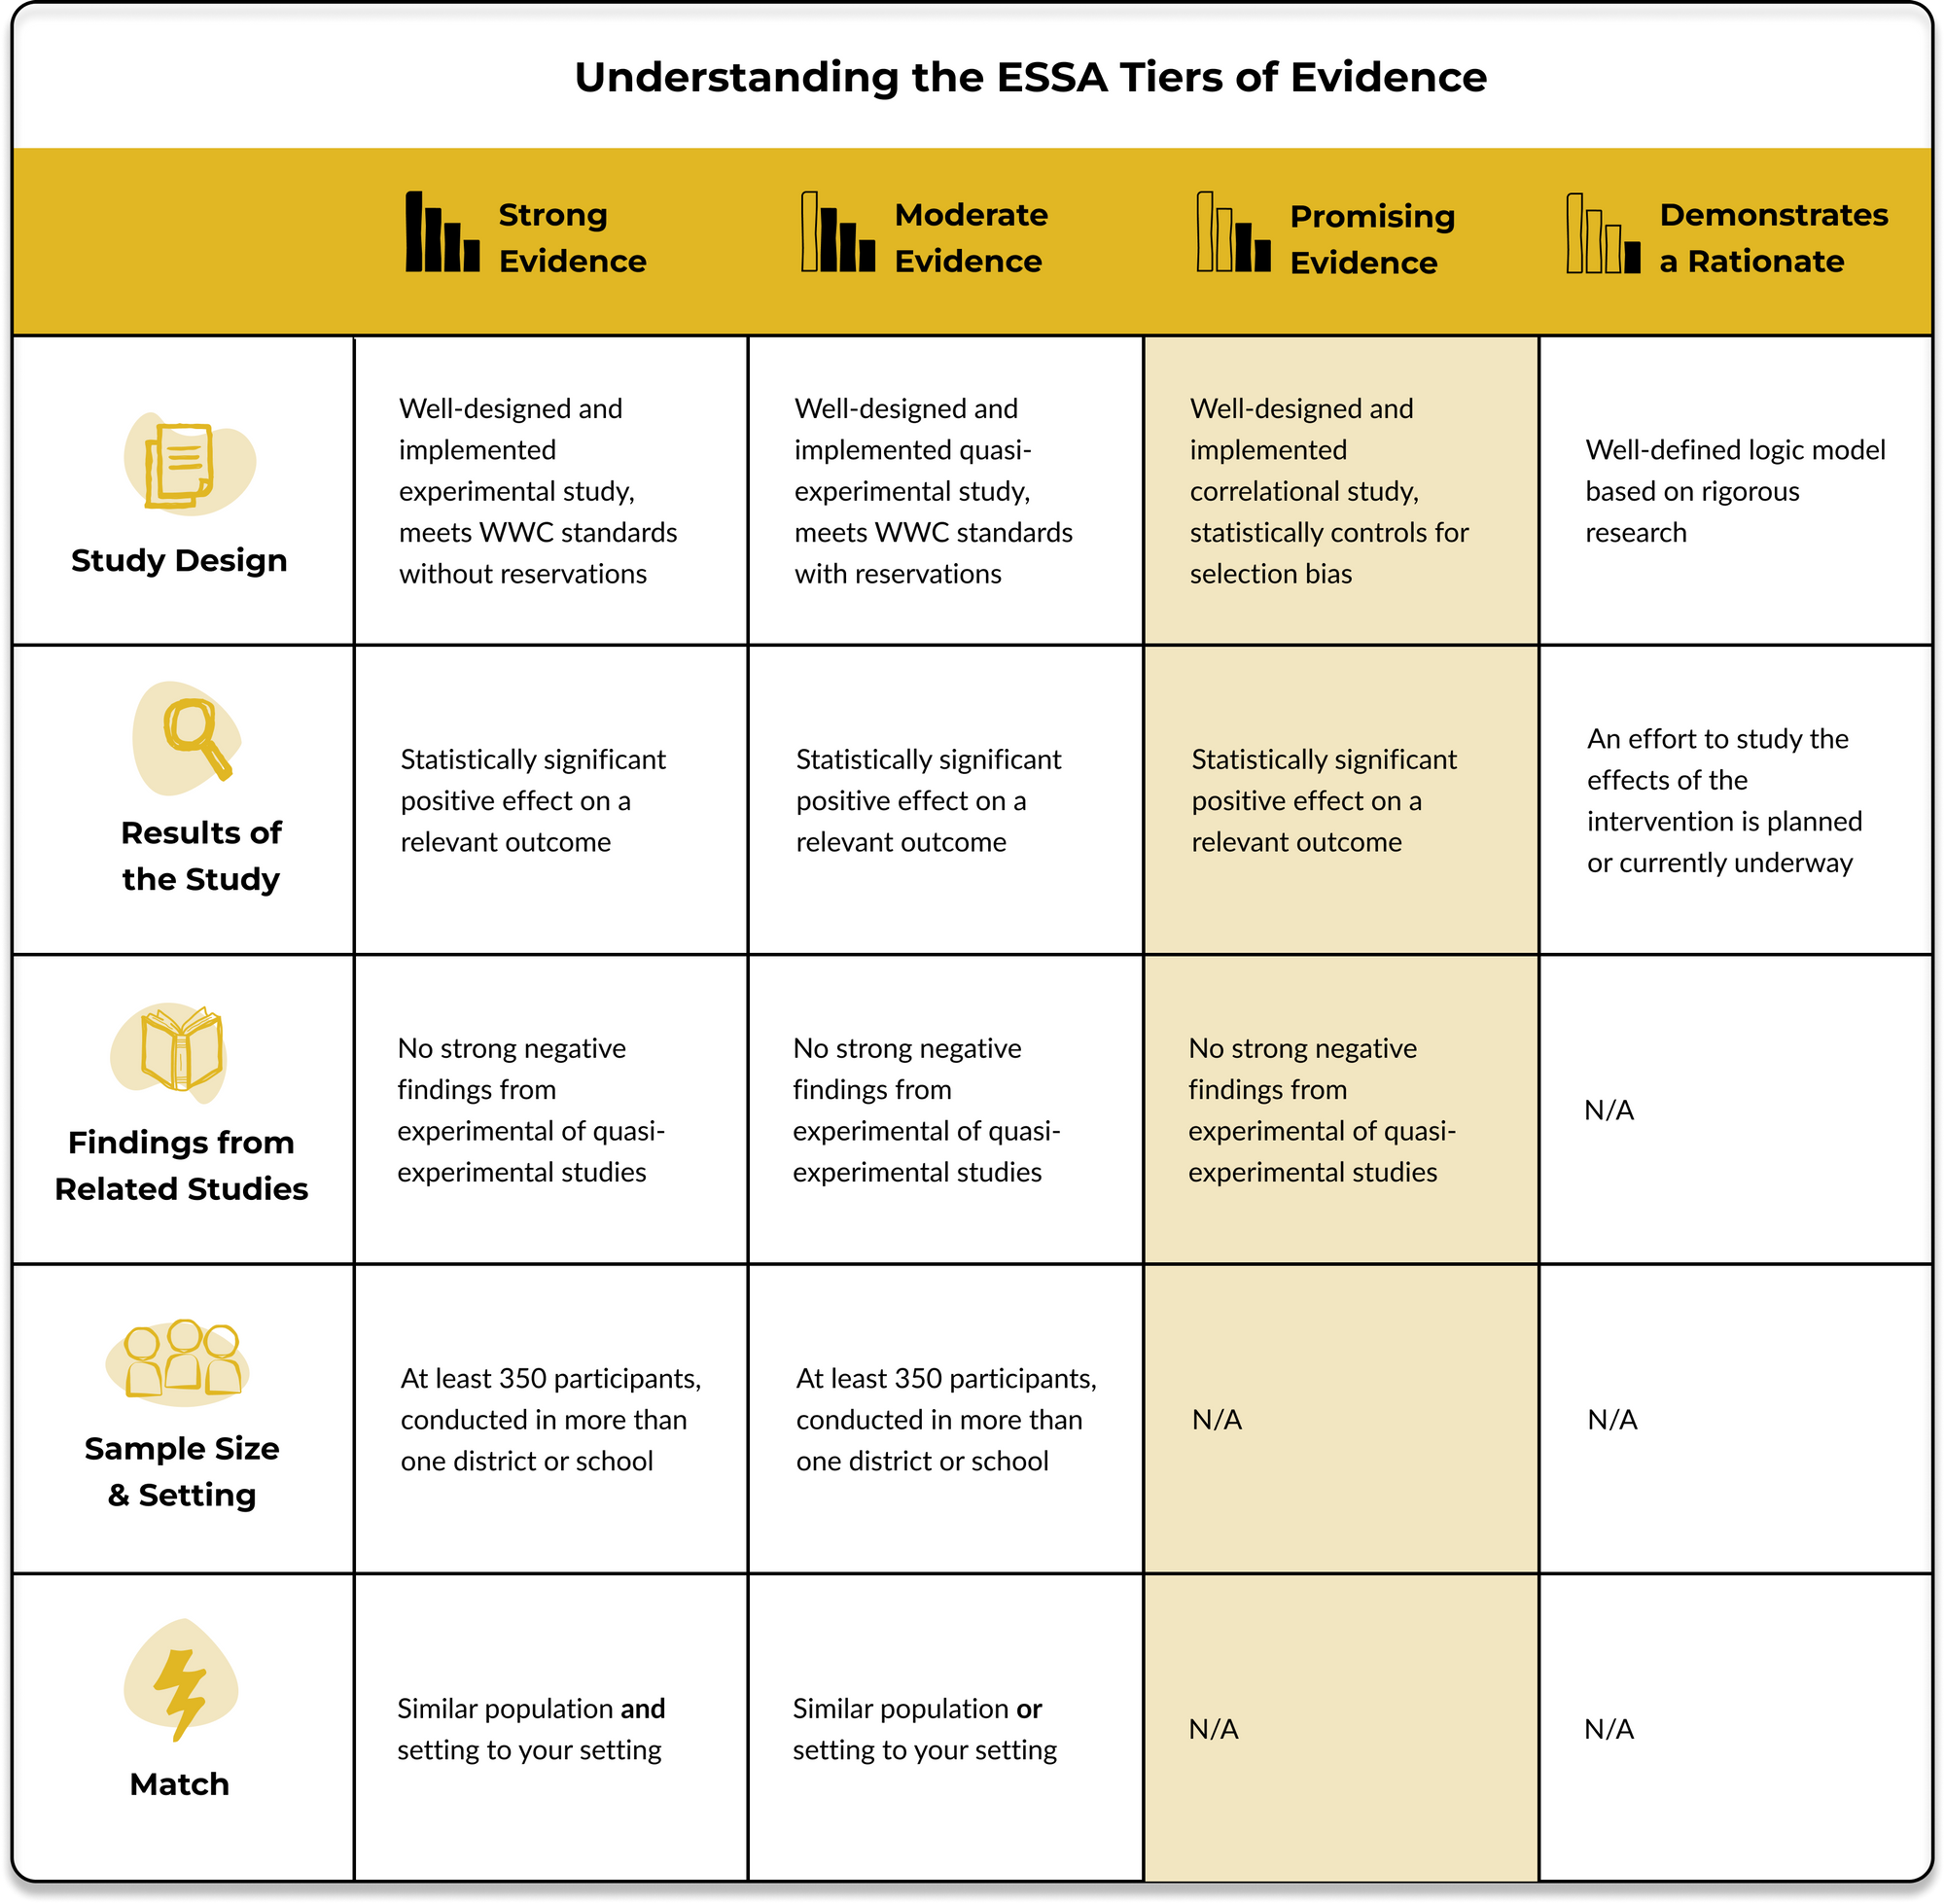 Image of ESSA tiers of evidence